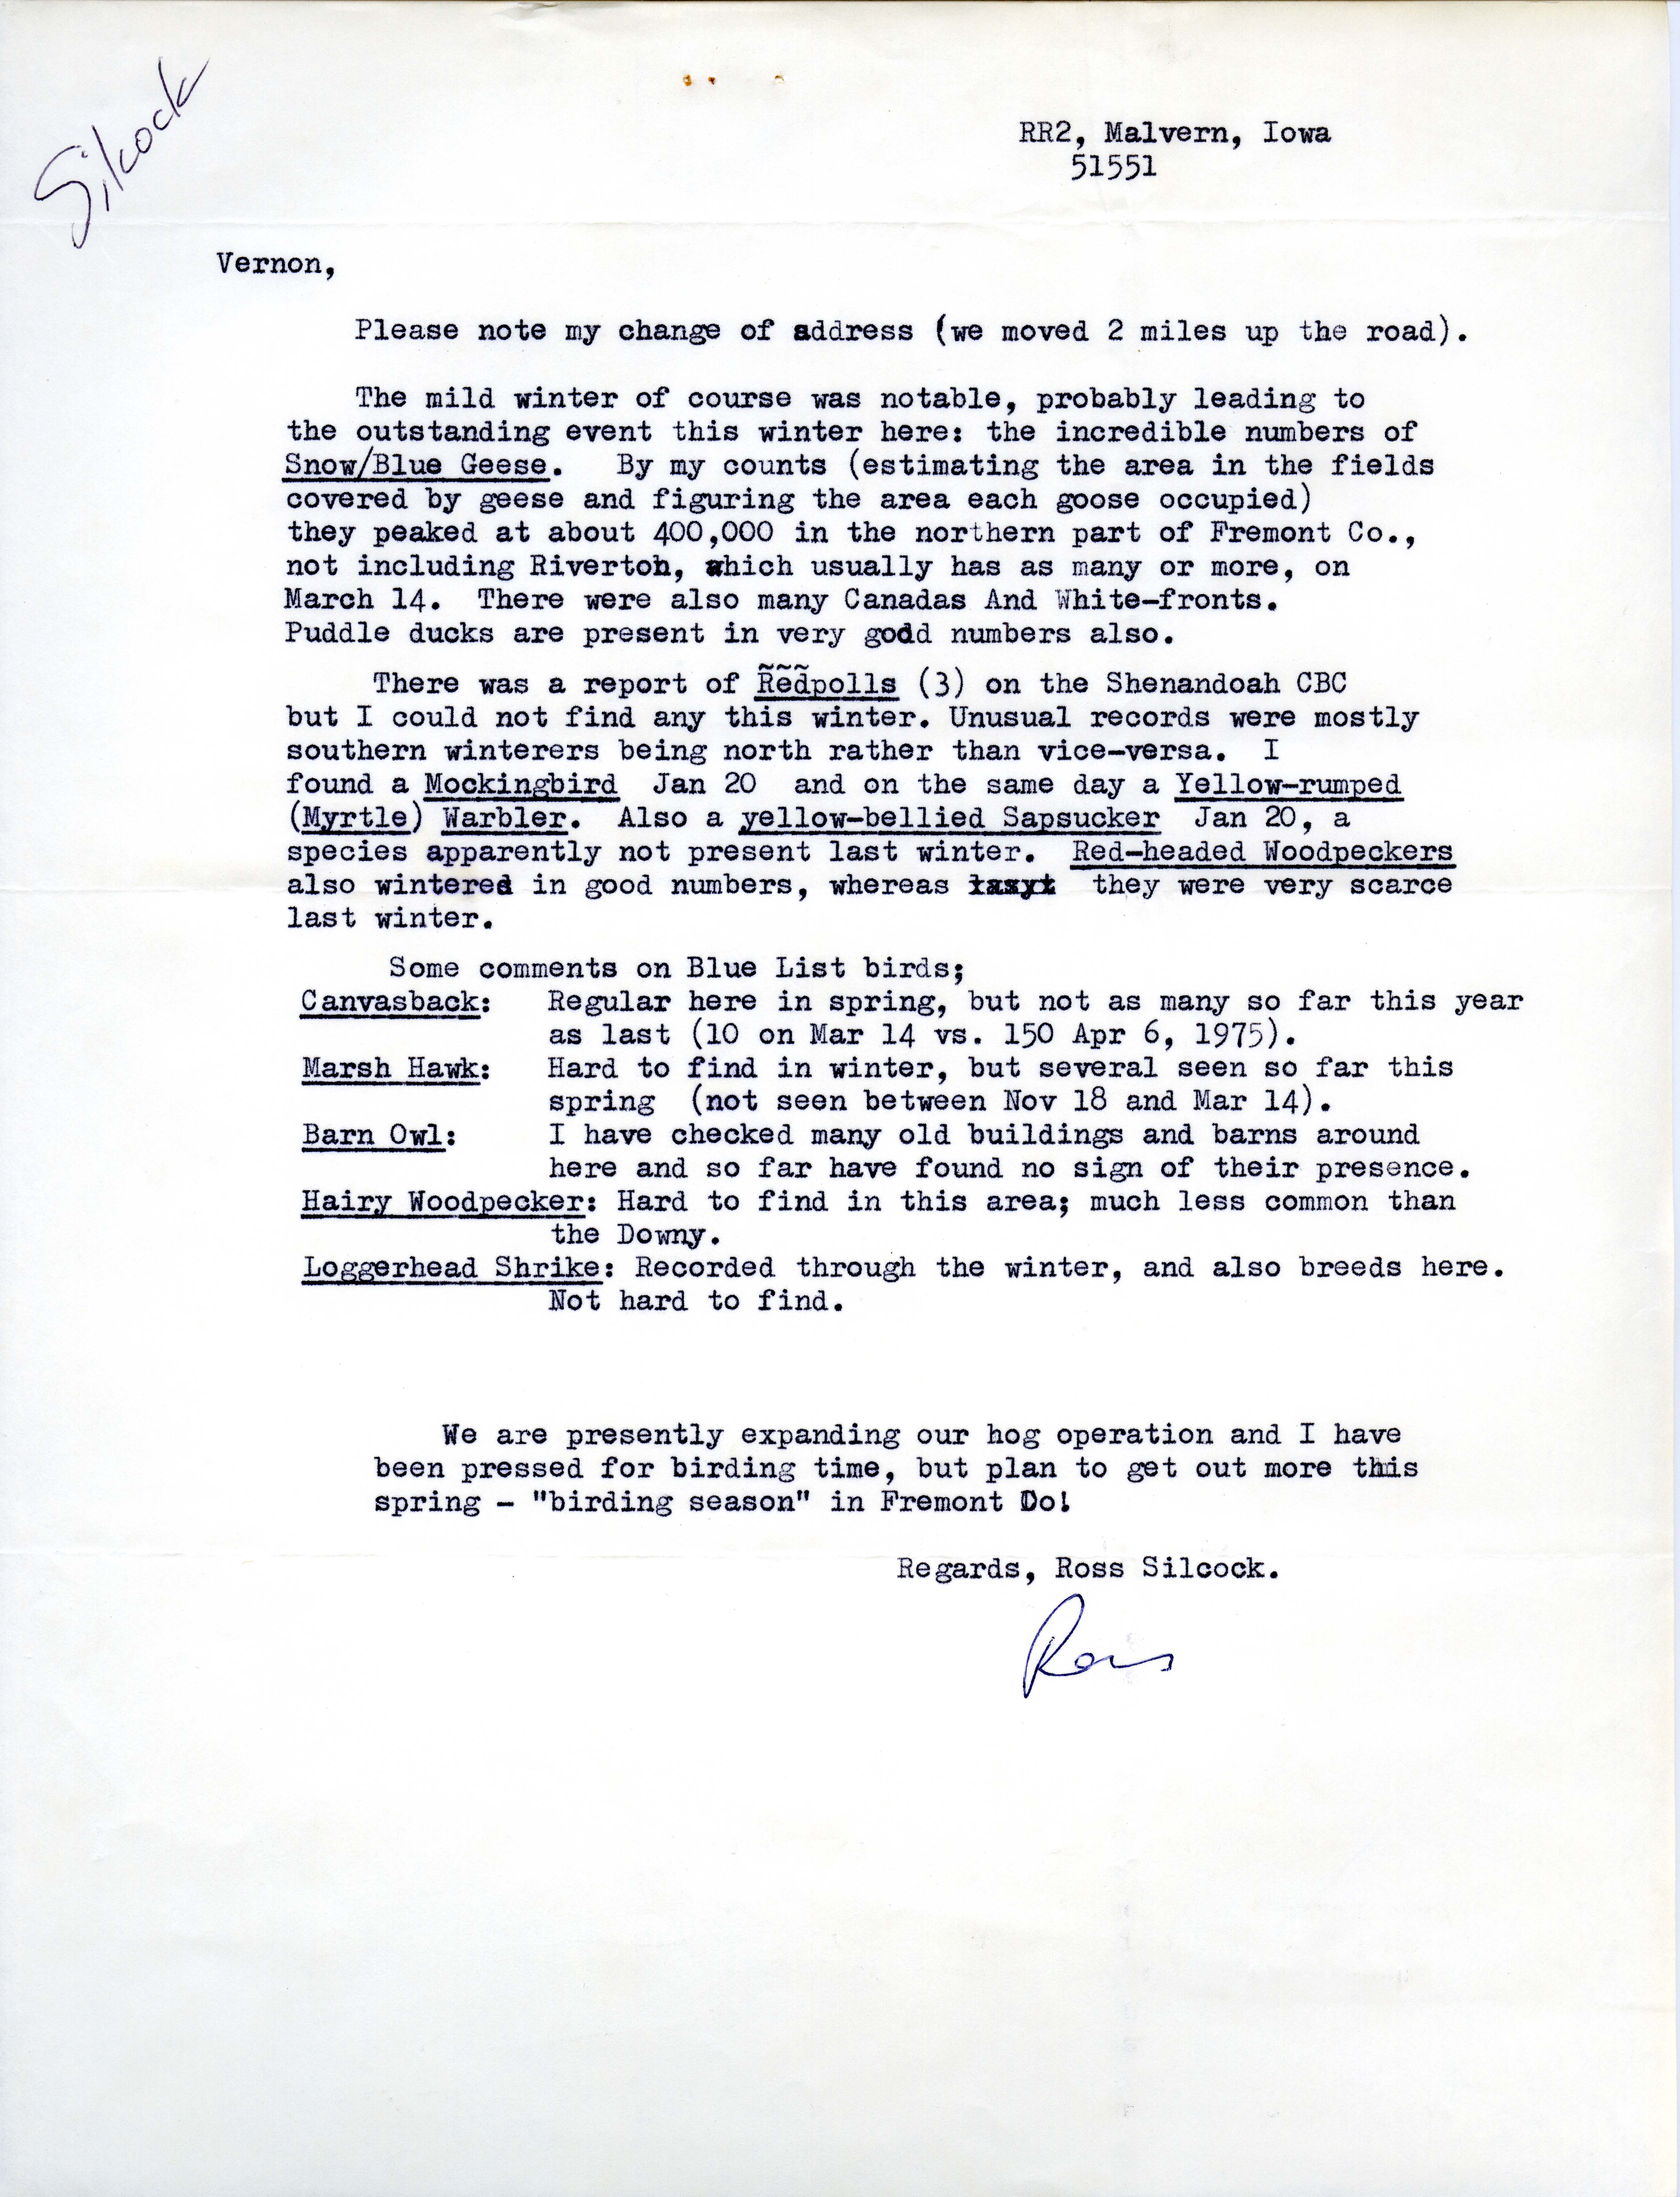 W. Ross Silcock letter to Vernon M. Kleen regarding bird observations for winter 1975/1976, undated